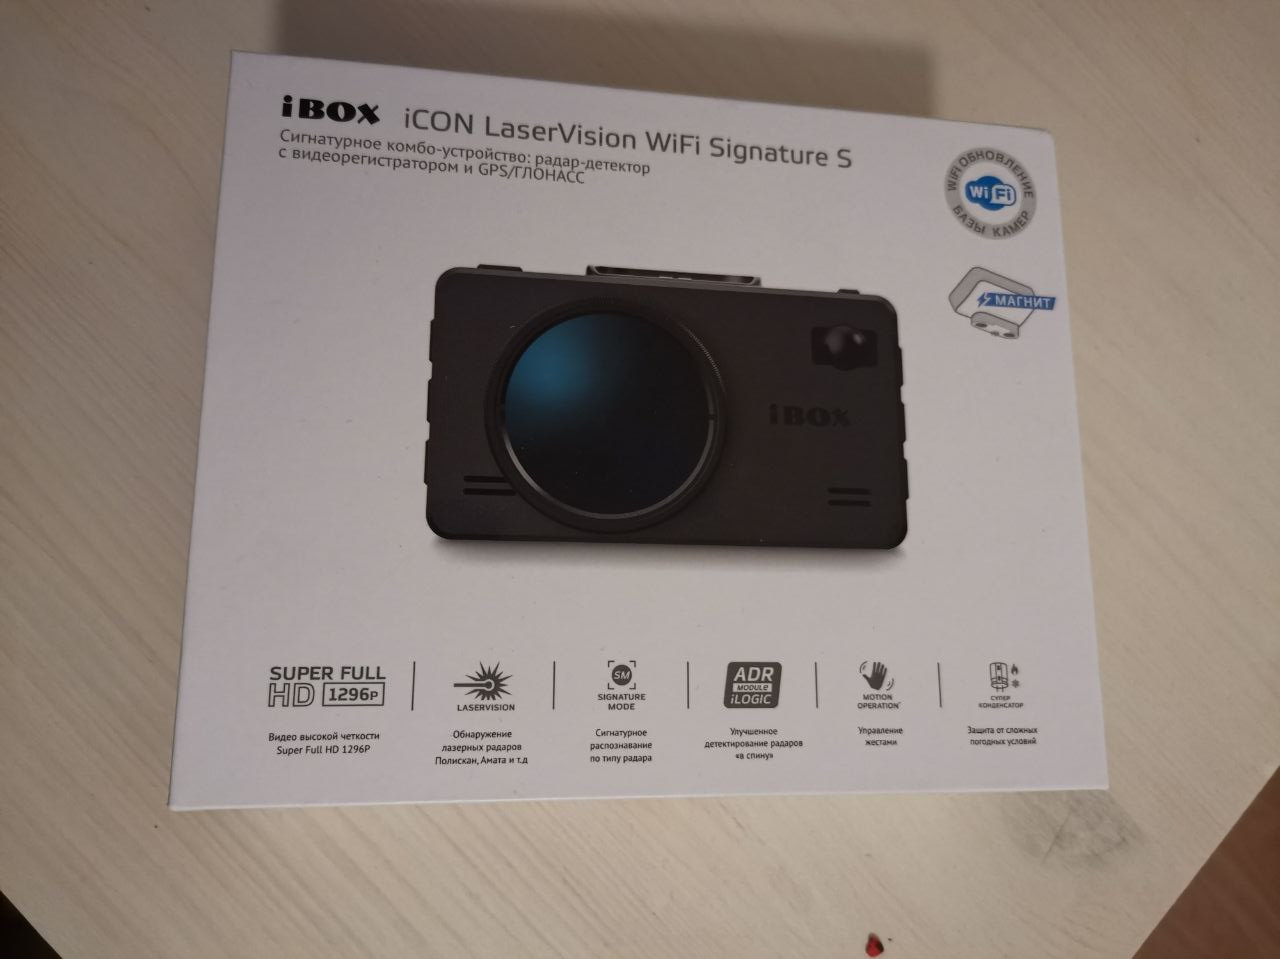 Ibox icon купить. IBOX icon laservision WIFI Signature s. Крепление регистратора IBOX icon. IBOX range laservision. IBOX icon laservision WIFI Signature s отзывы.